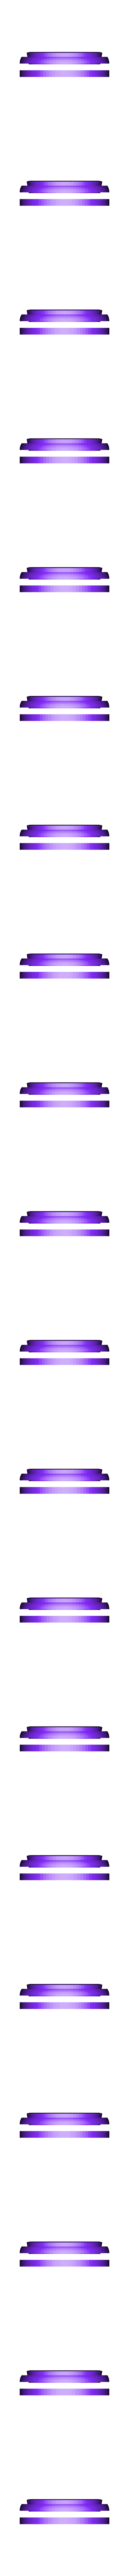 OPTION - Potentiomètre Luminosite MultiColor 2.stl Download free STL file The Animated Pixel Lamp • 3D print design, Heliox